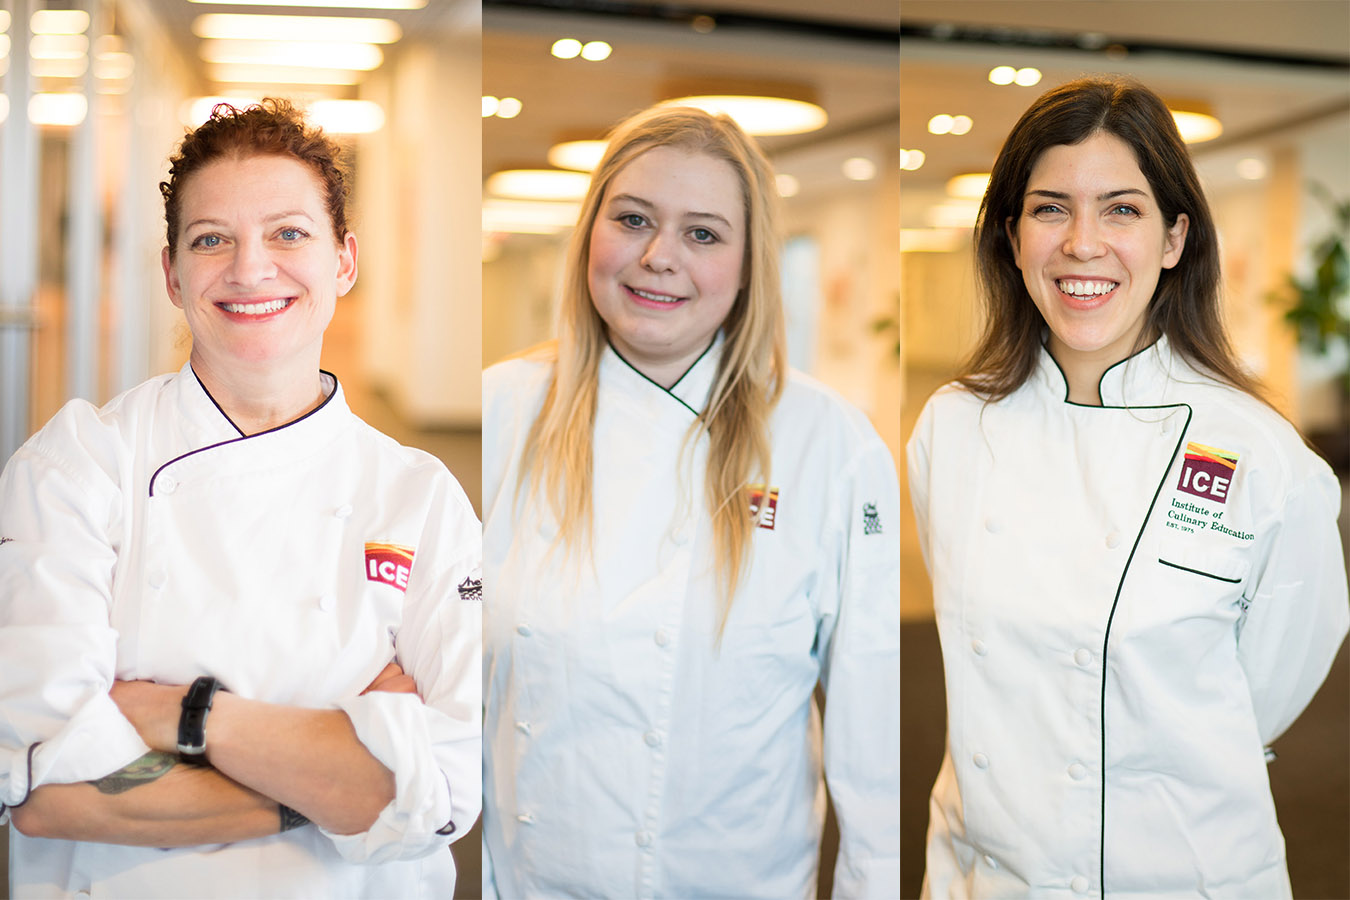 Chef-instructors Barbara Rich, Olivia Roszkowski and Ann Nunziata teach career training classes at ICE.